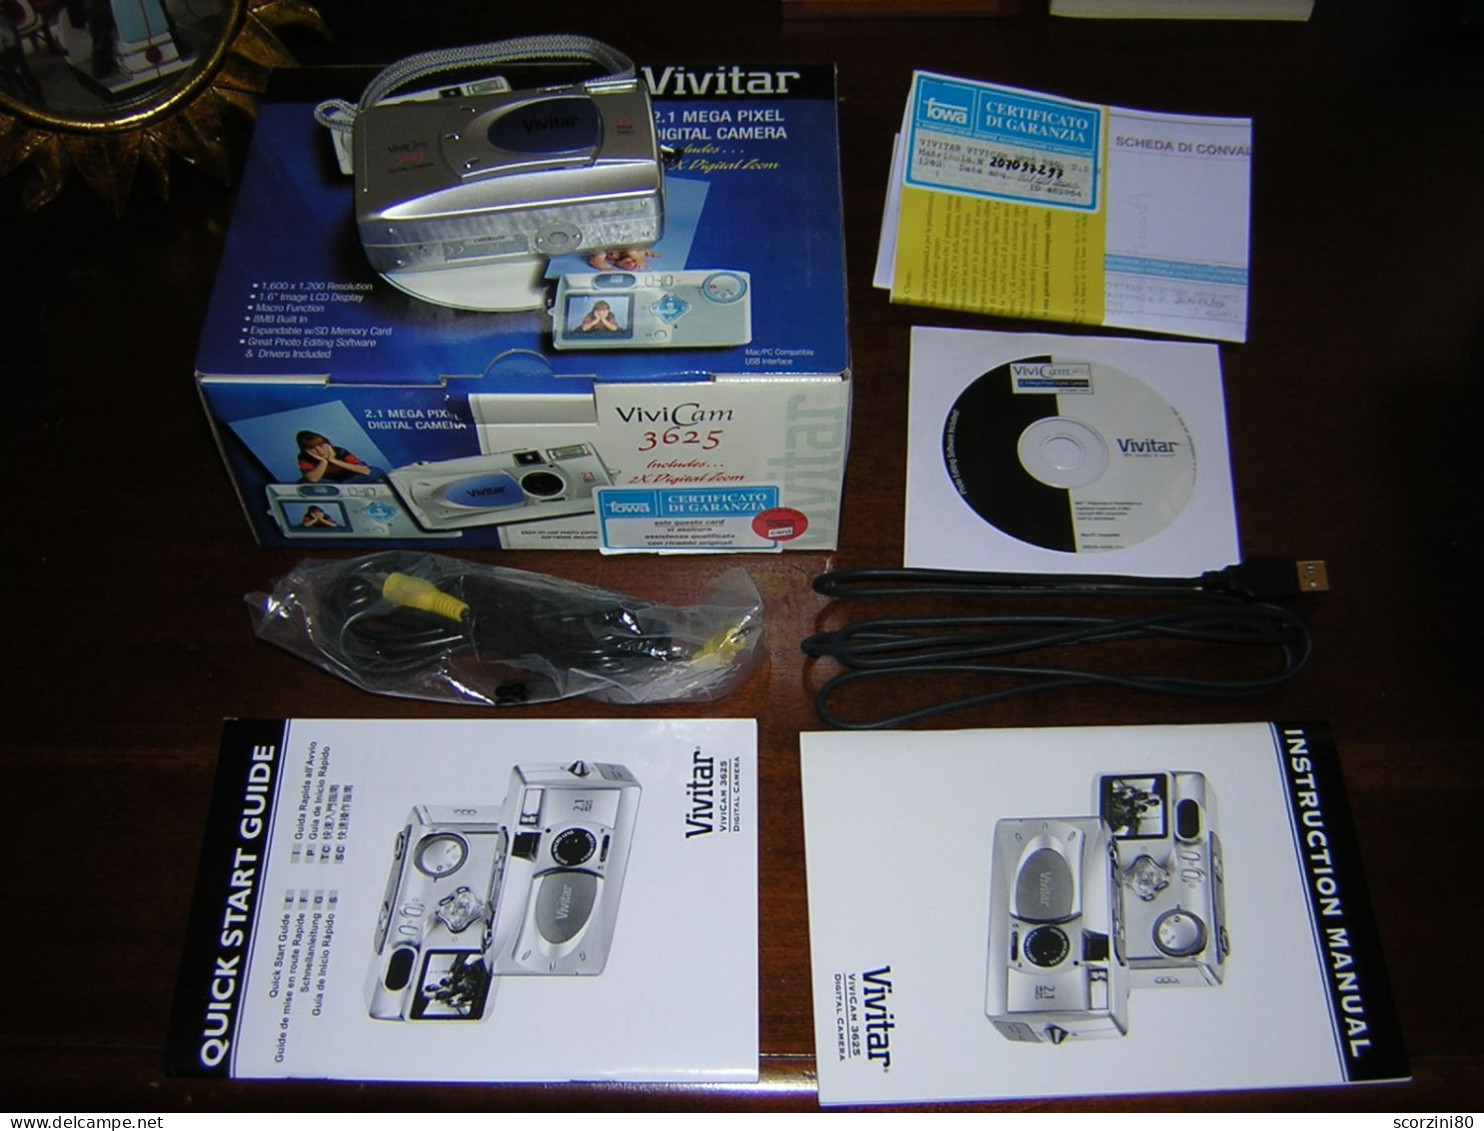 Vivitar 2.1 Megapixel Digital Camera FUNZIONANTE - Andere Geräte